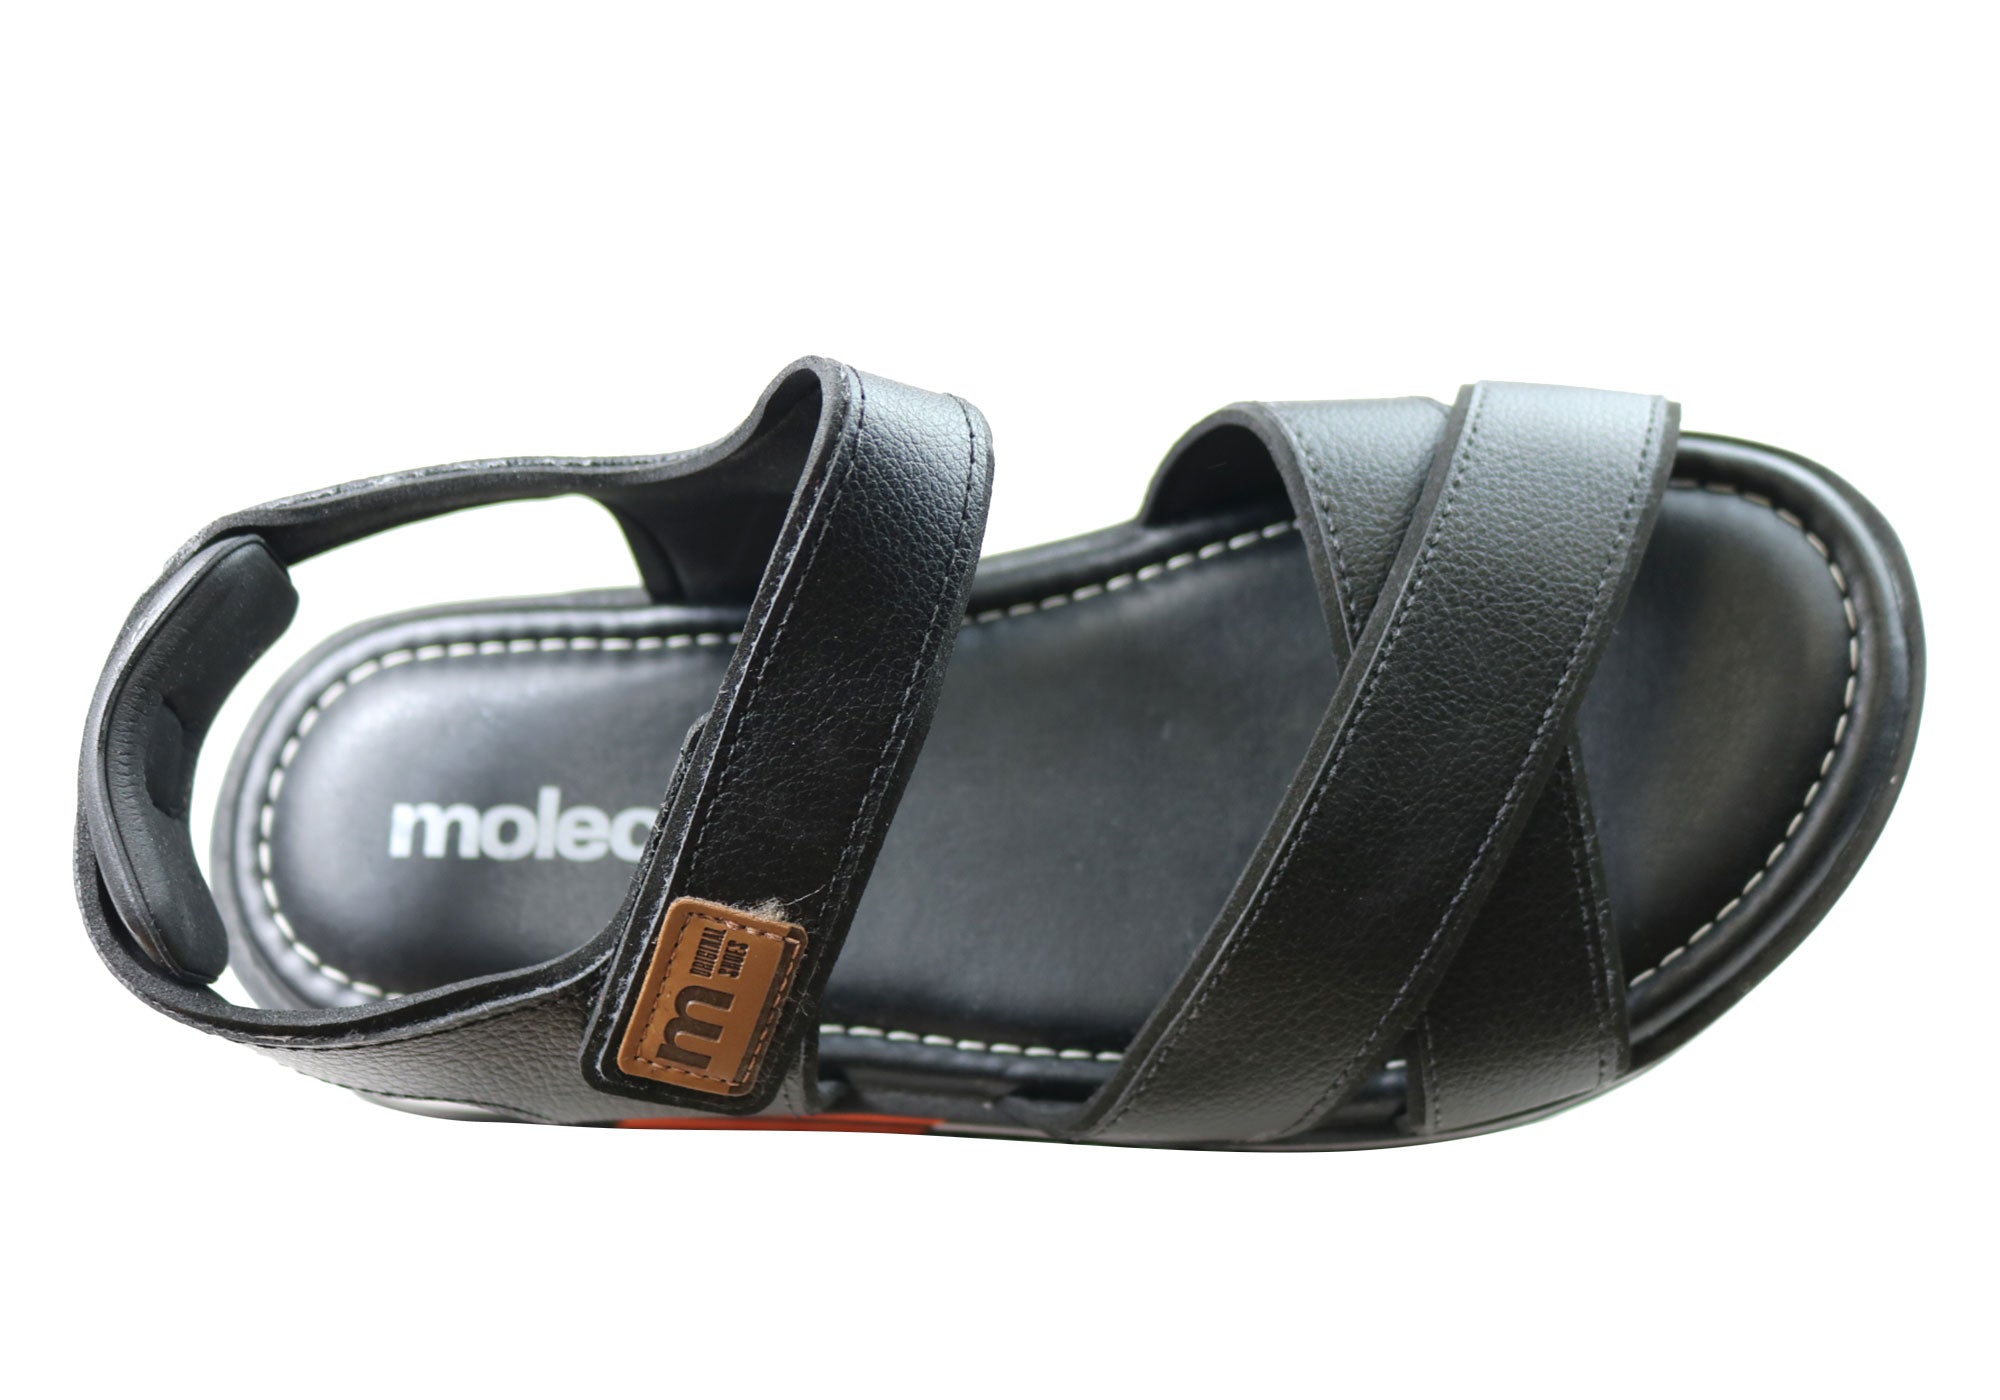 Moleca Popi Womens Comfortable Sandals Made In Brazil